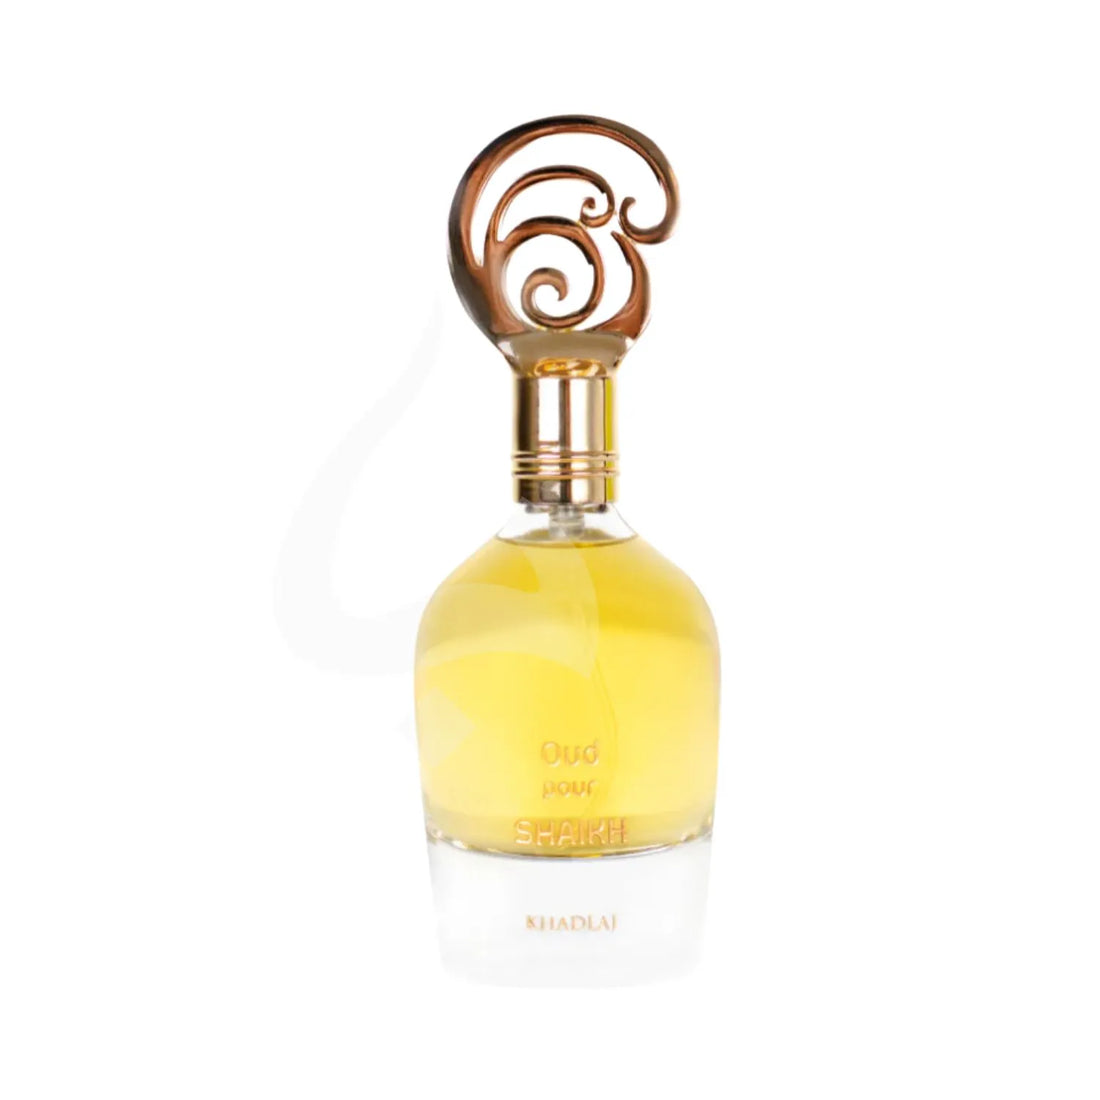 Oud Pour Shaikh Perfume Bottle